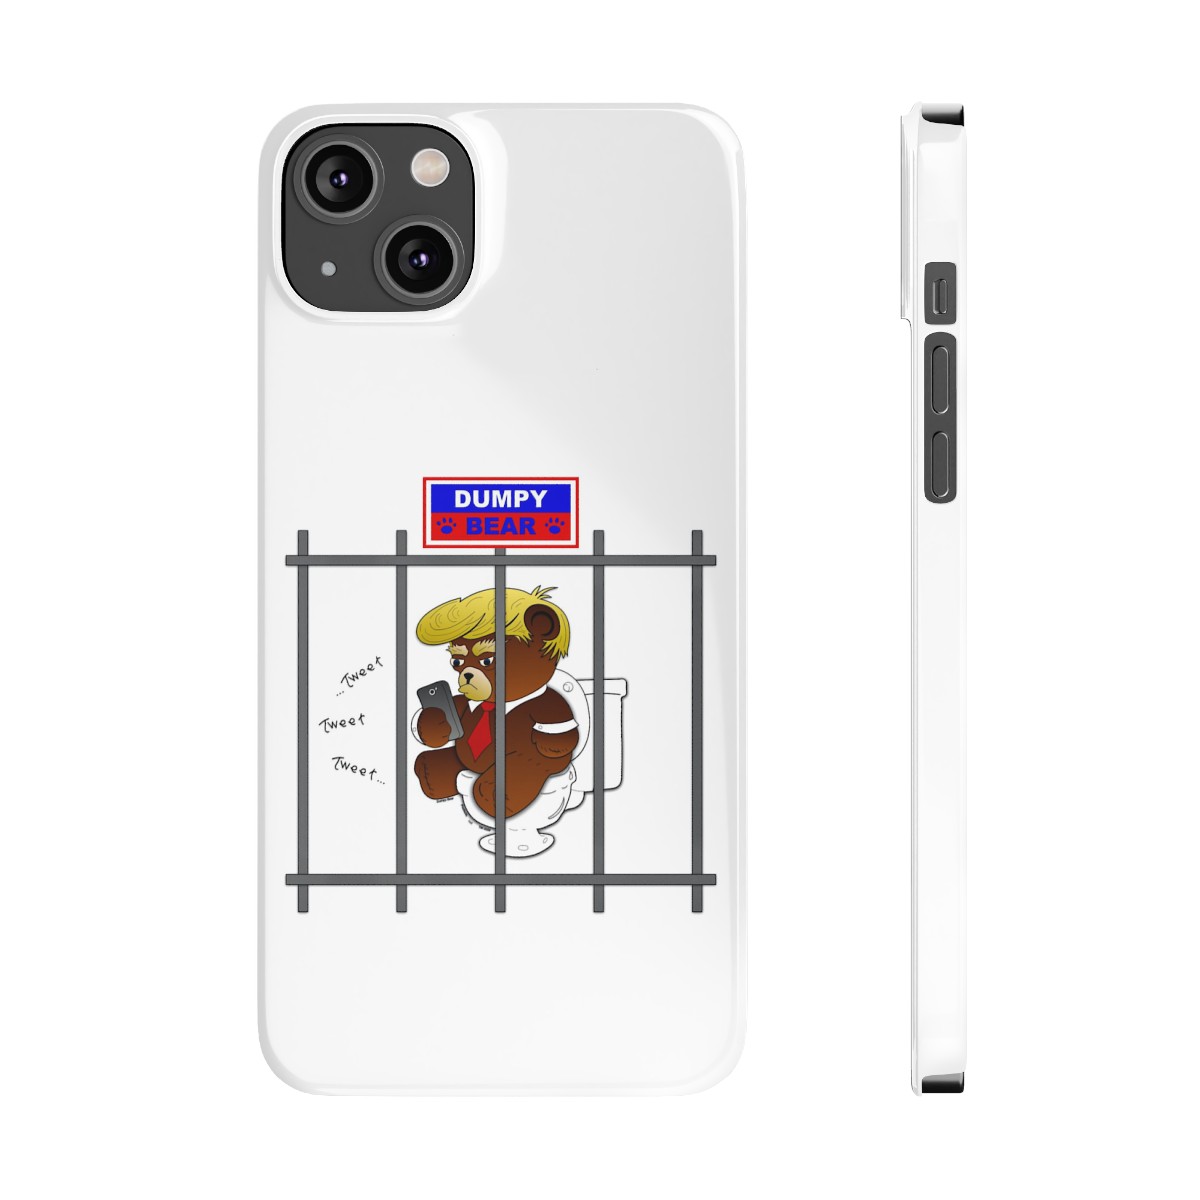 Dumpy Bear Tweeting on Toilet Behind Bars - iPhone Slim Phone Cases product thumbnail image